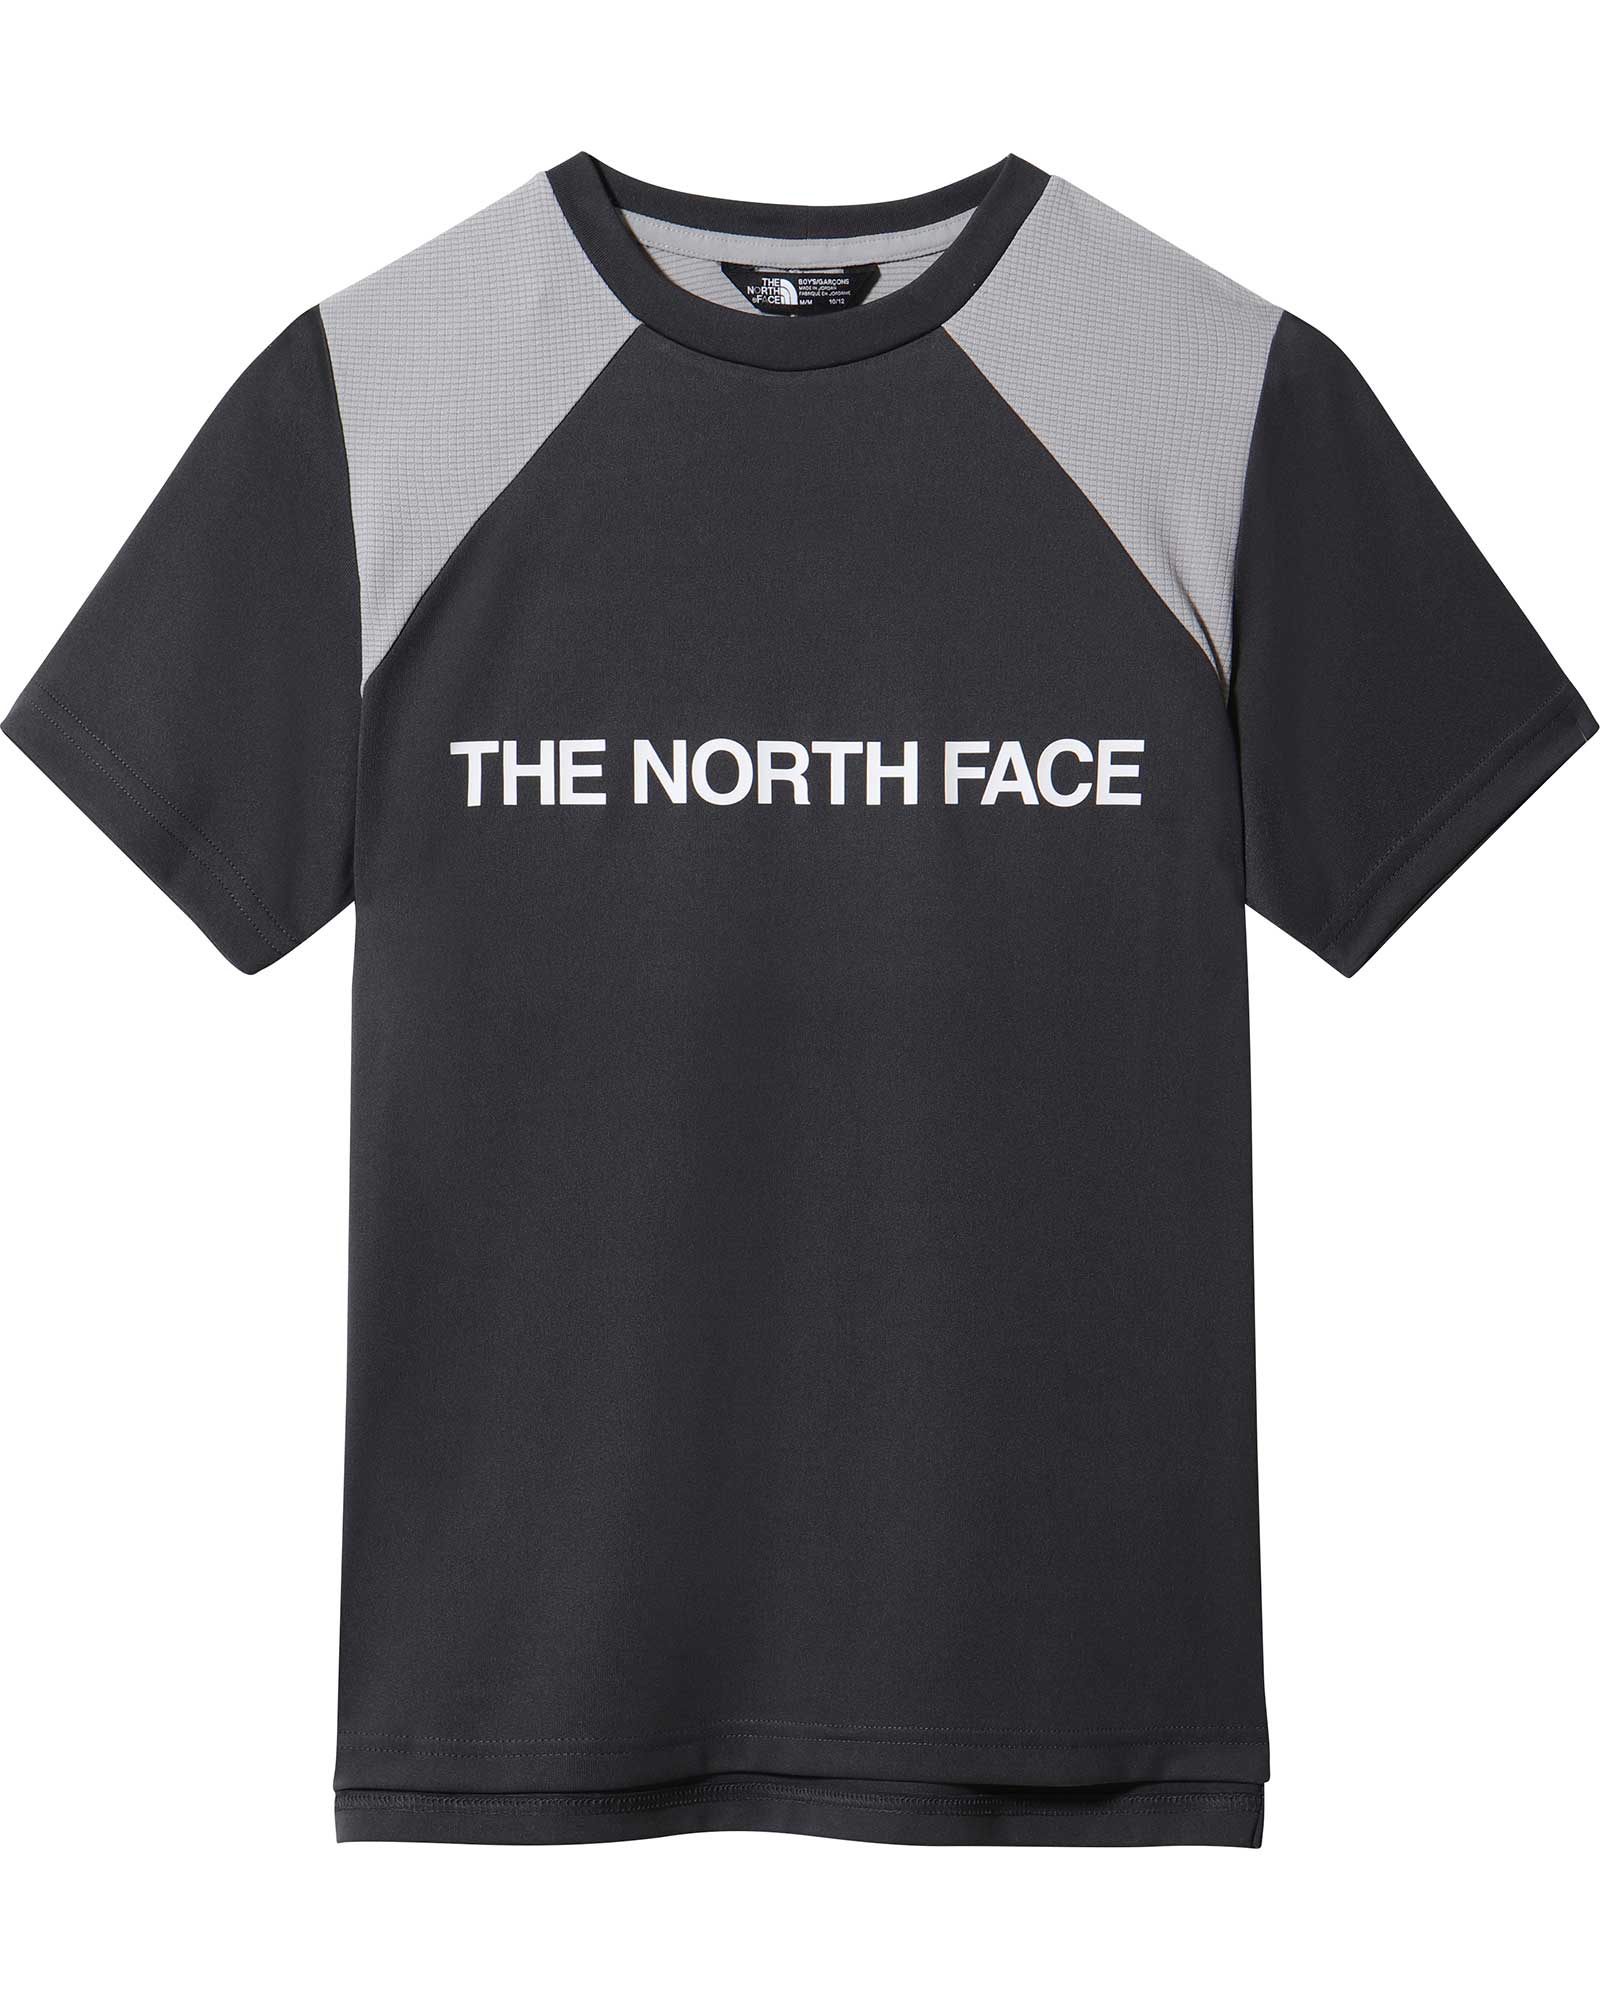 The North Face Never Stop Boys’ T Shirt XL - Asphalt Grey XL